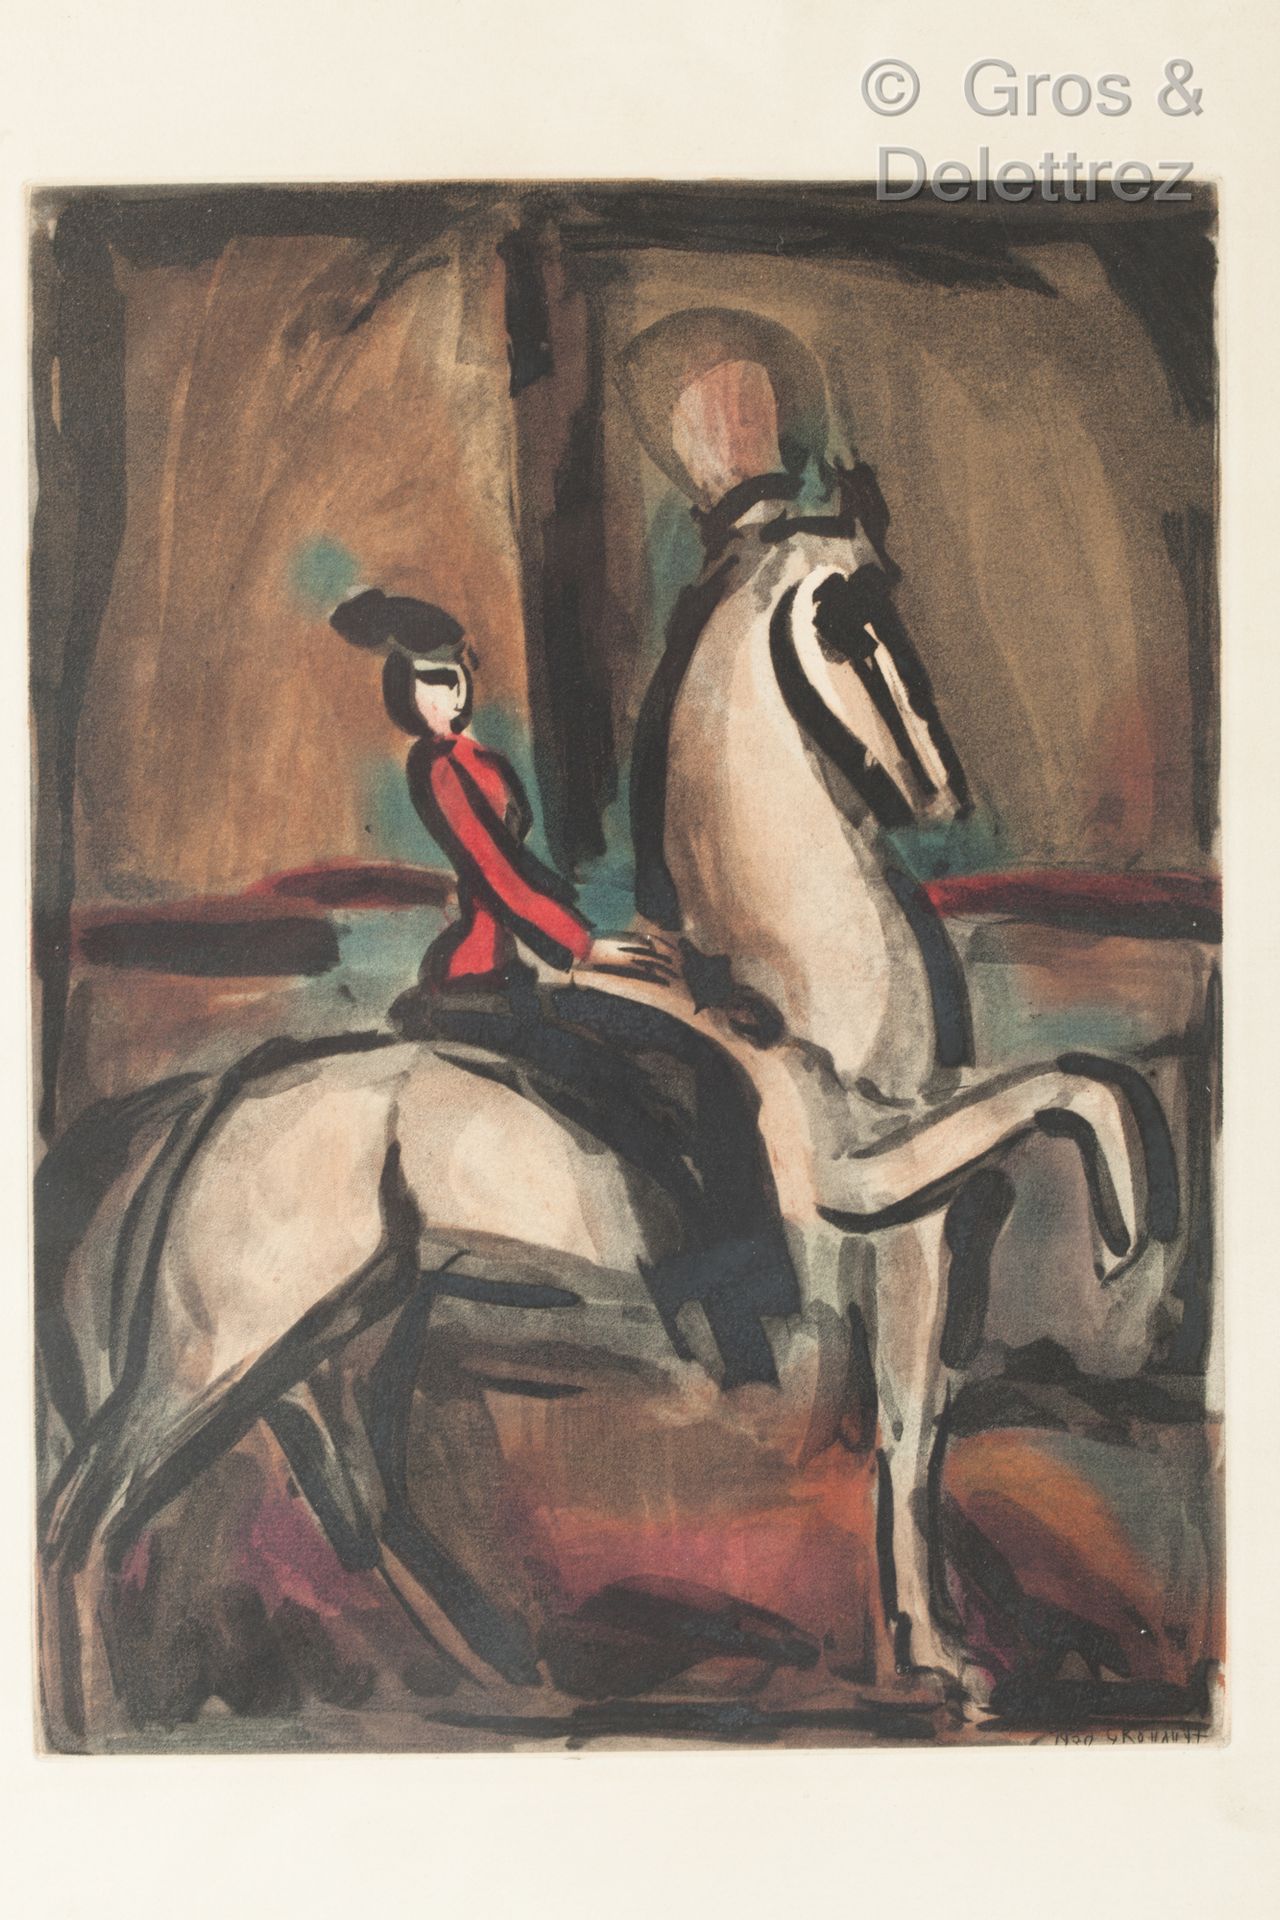 Georges ROUAULT (1871 - 1958) 亚马逊。板块来自安德烈-苏亚雷斯的《马戏团》。1930.

彩色水印，右下角有日期和签名。

正面略&hellip;